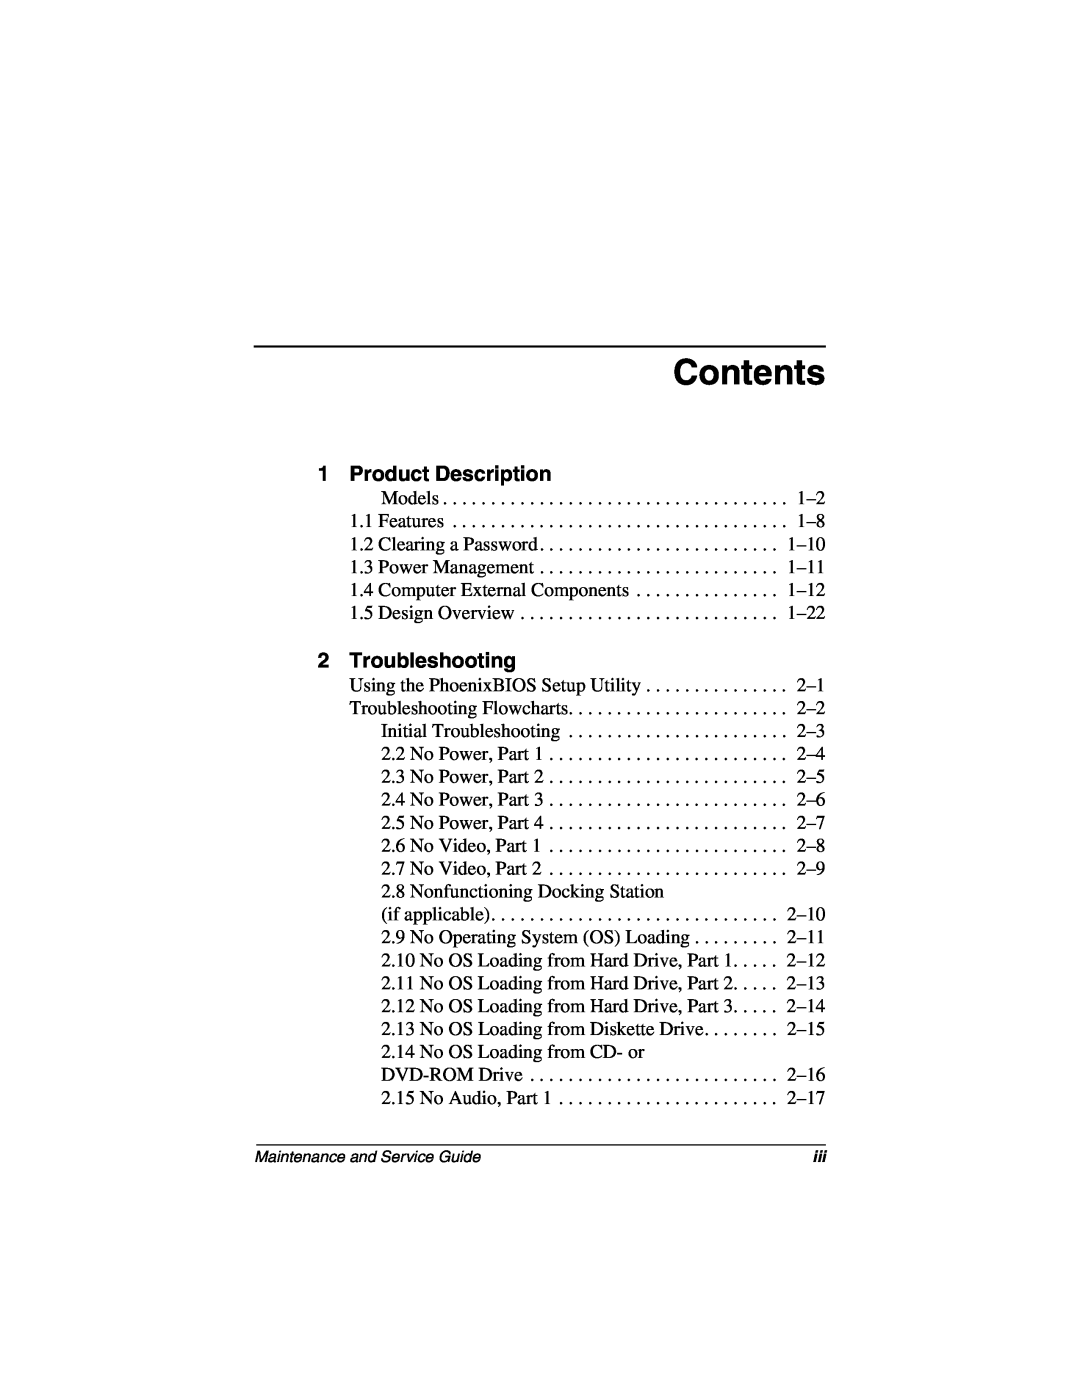 Compaq N160 manual Contents, Product Description, Troubleshooting 